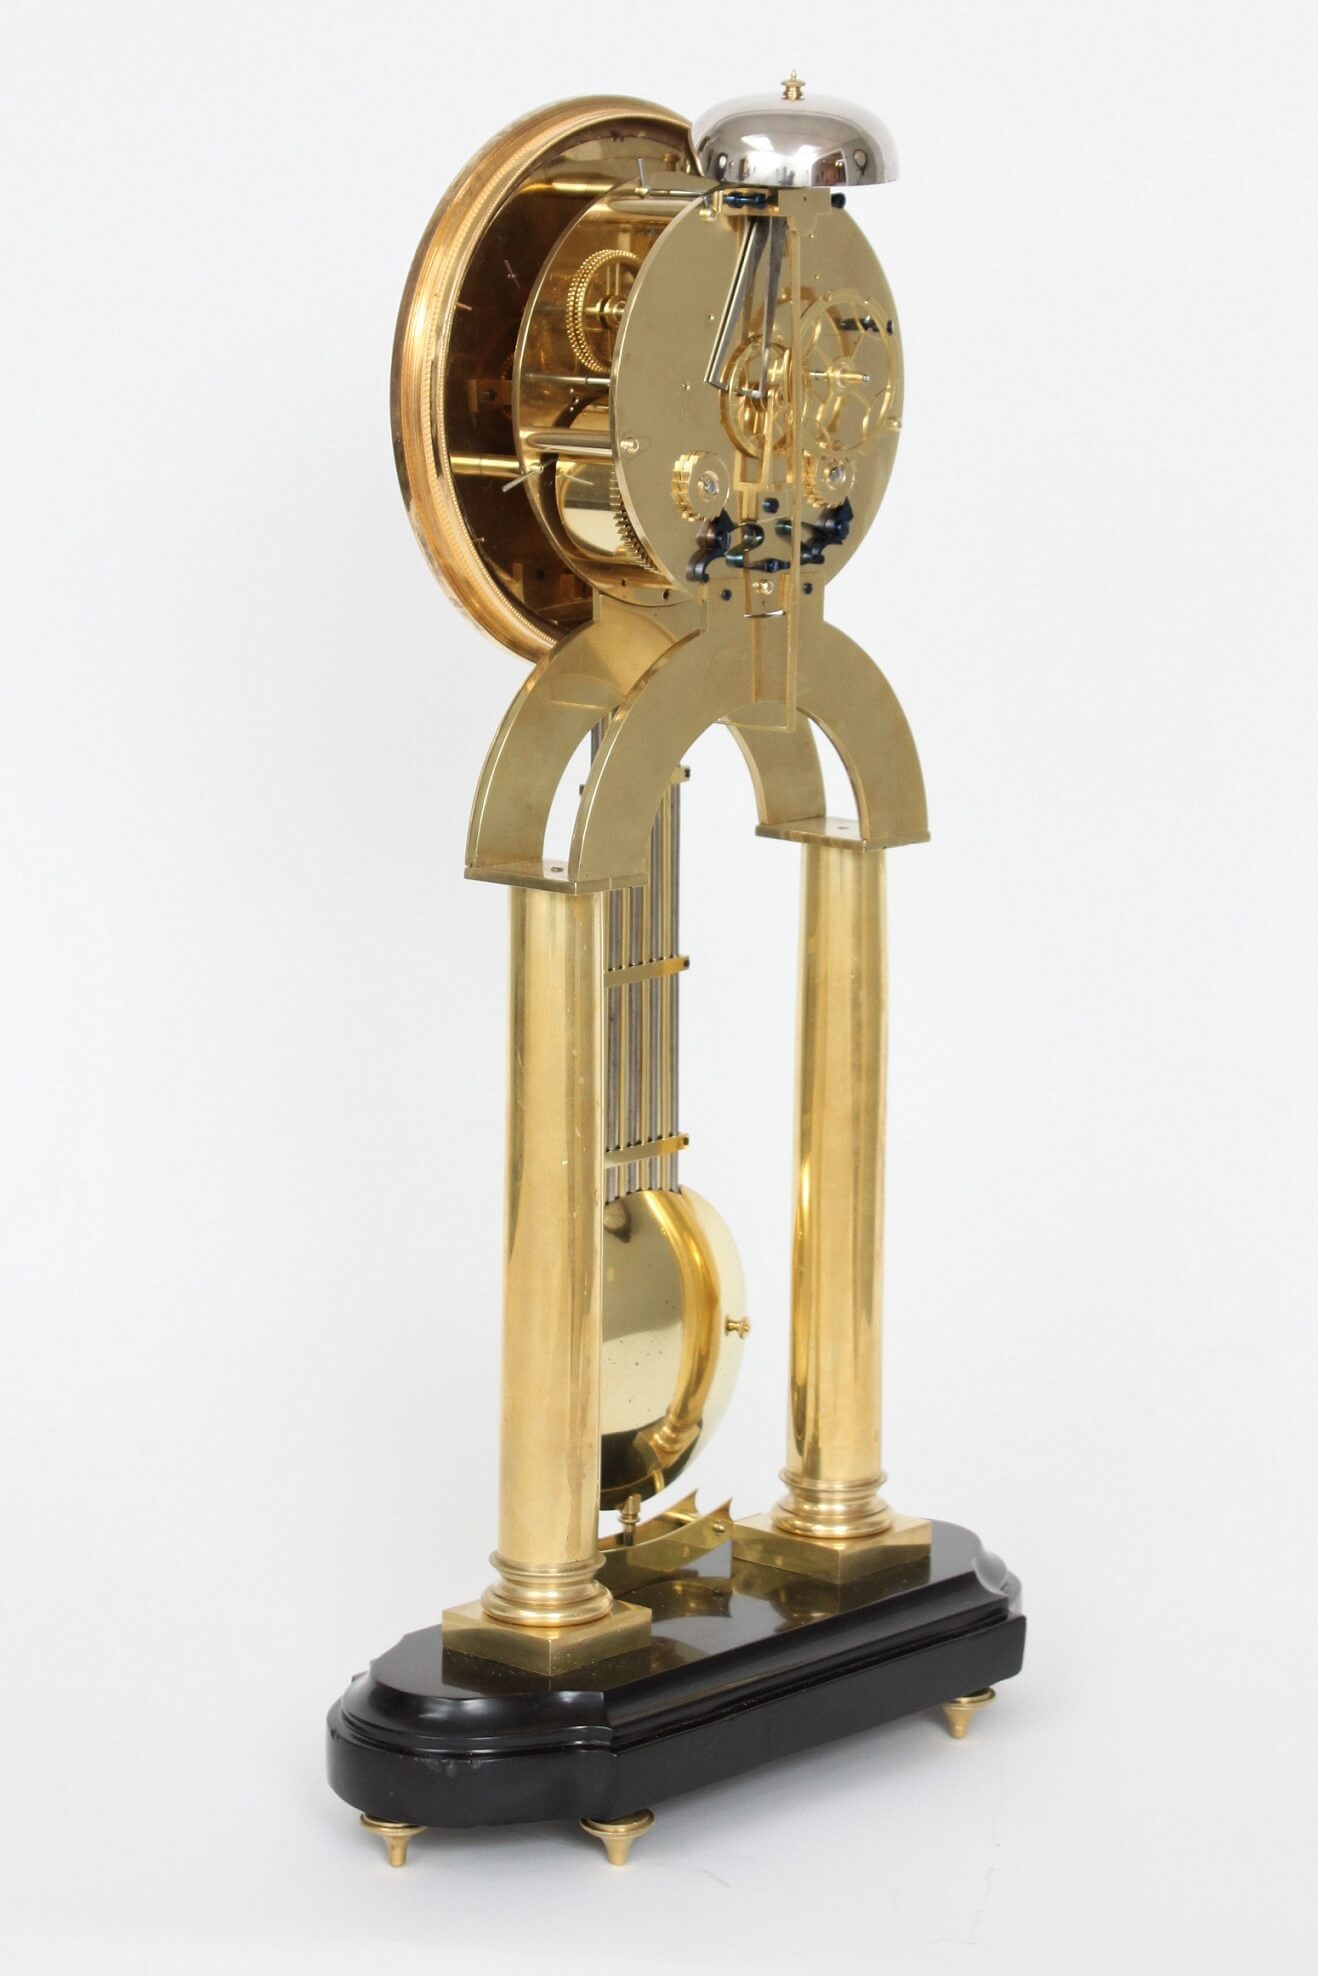 Belgian-French-ormolu-brass-skeleton-regulator-striking-marble-precision-antique-clock-sarton-liege-luik-